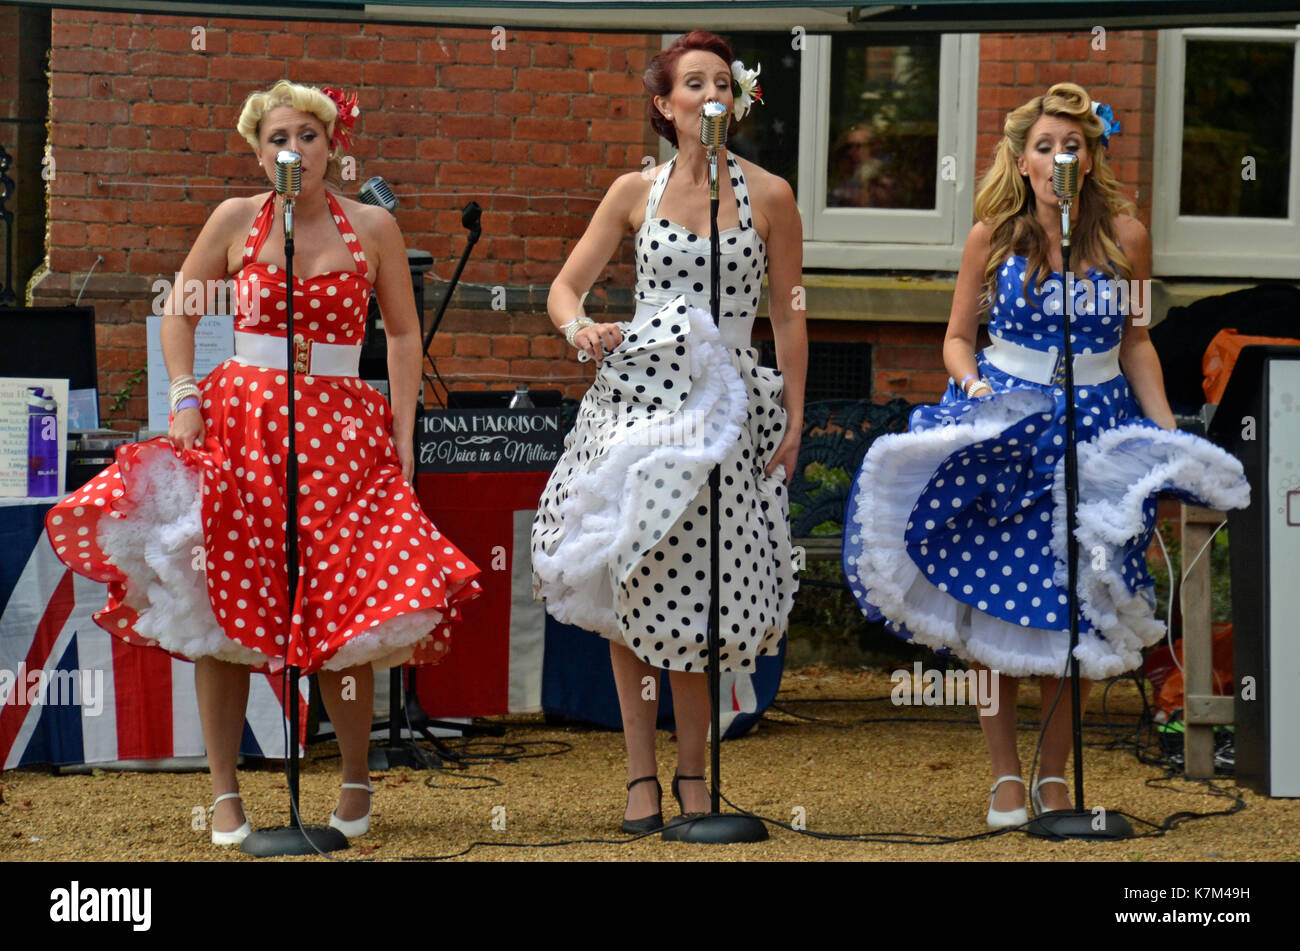 Three women in polkadot dresses, singing 1940s songs Stock Photo